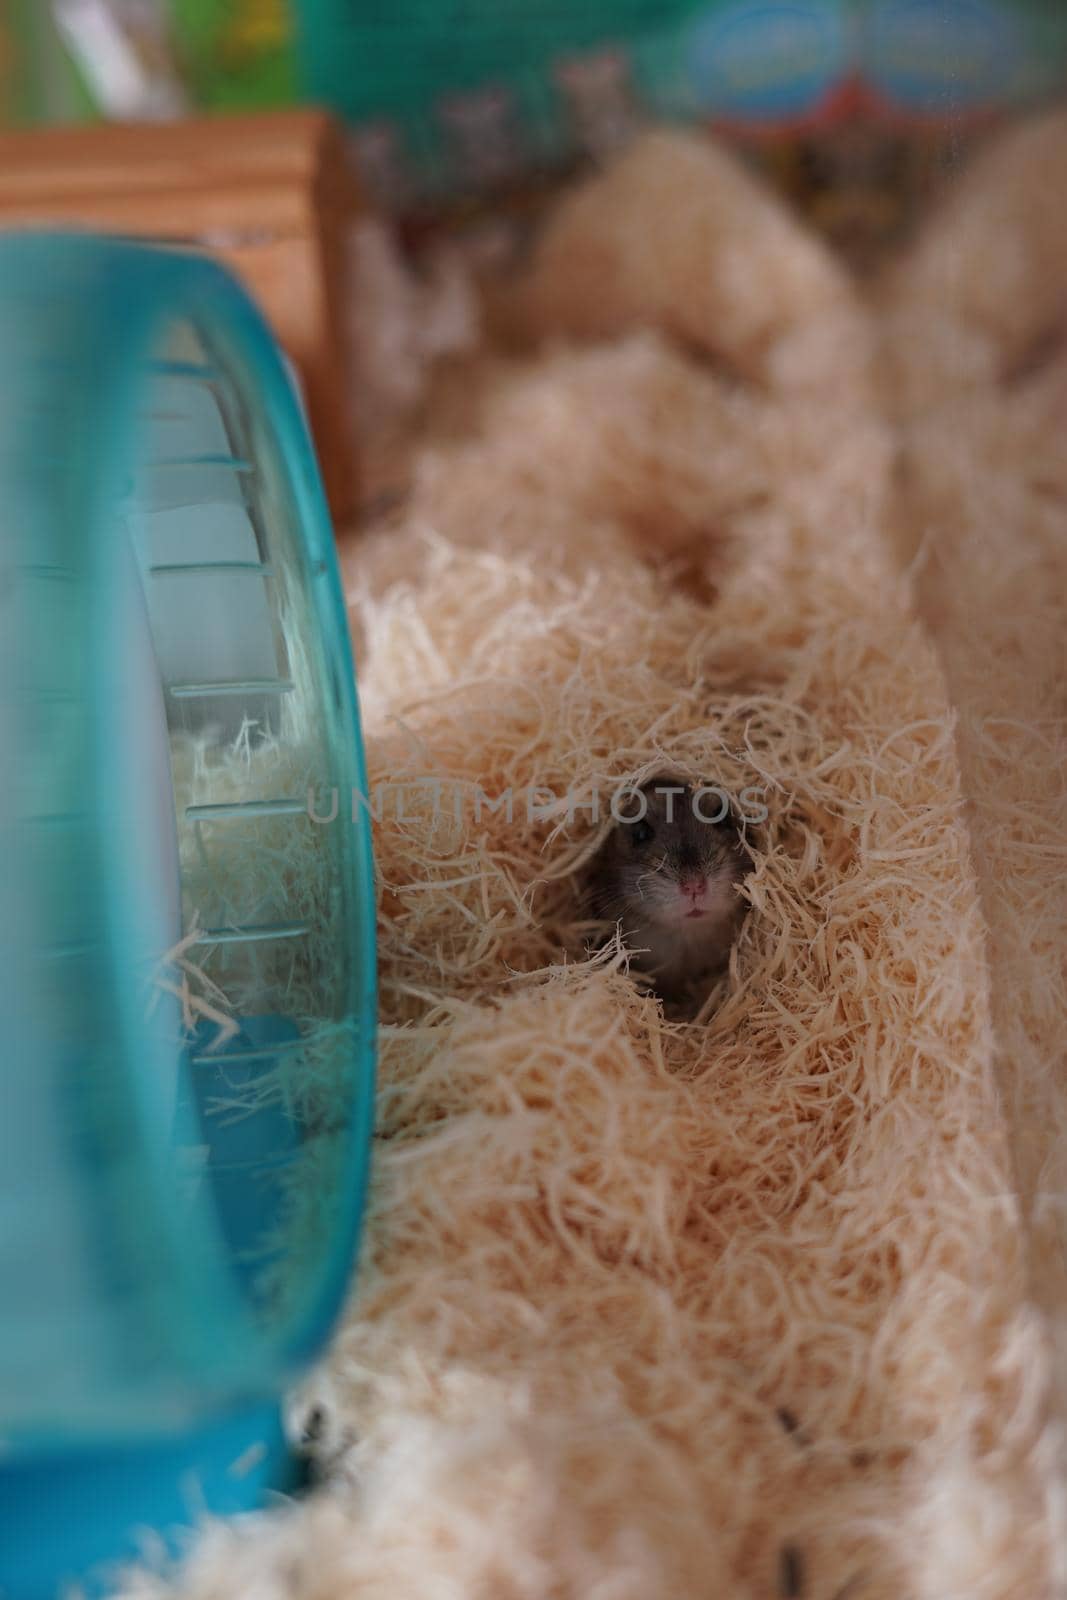 Jungarian hamster image. Shooting Location: Yokohama-city kanagawa prefecture